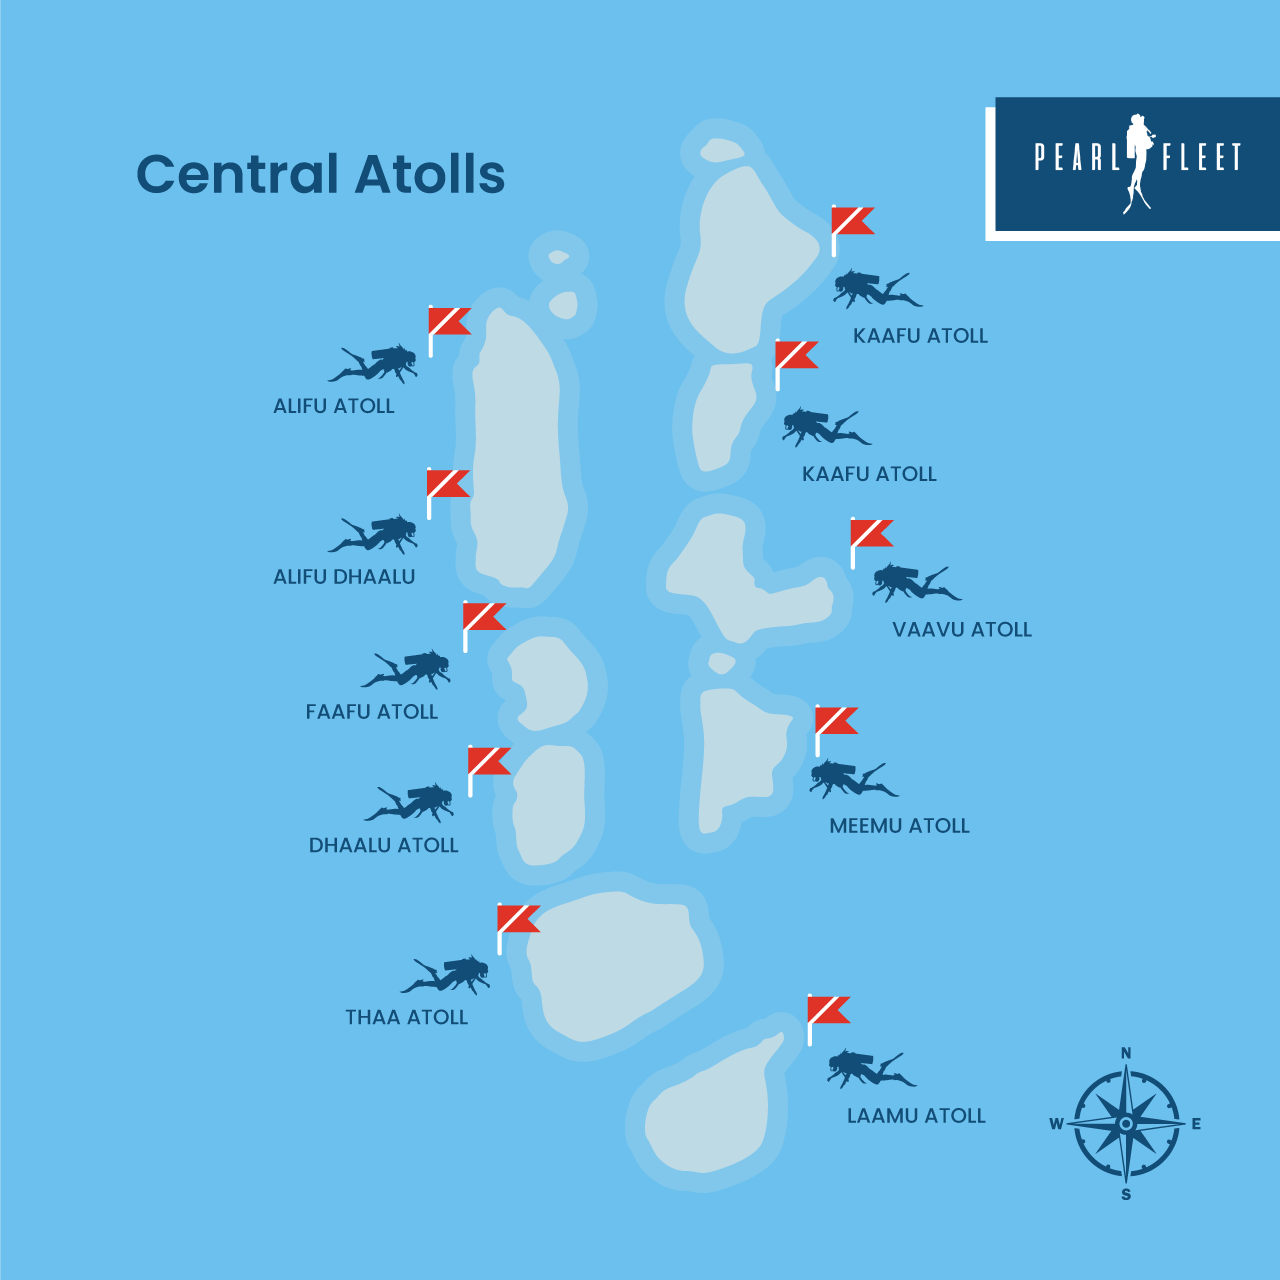 Central Atolls